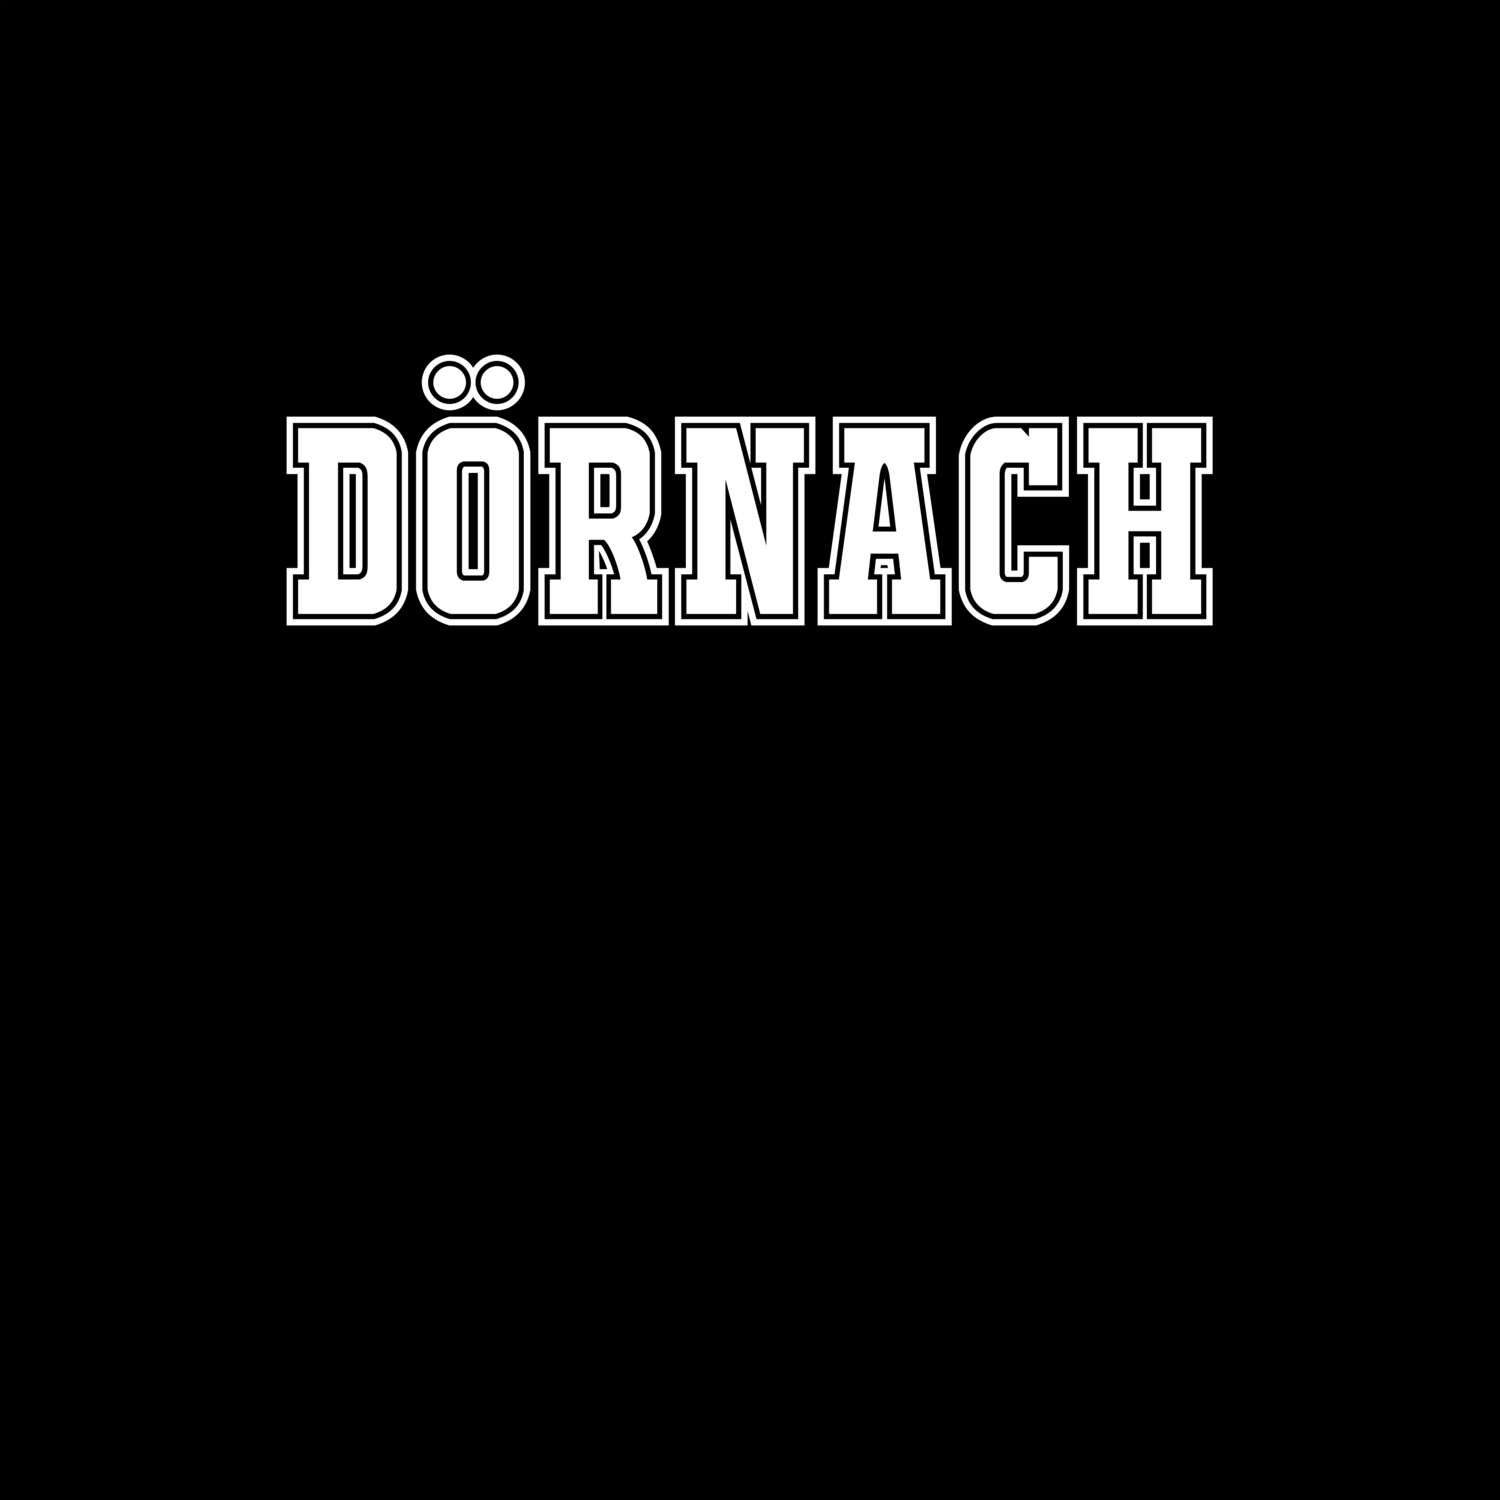 Dörnach T-Shirt »Classic«